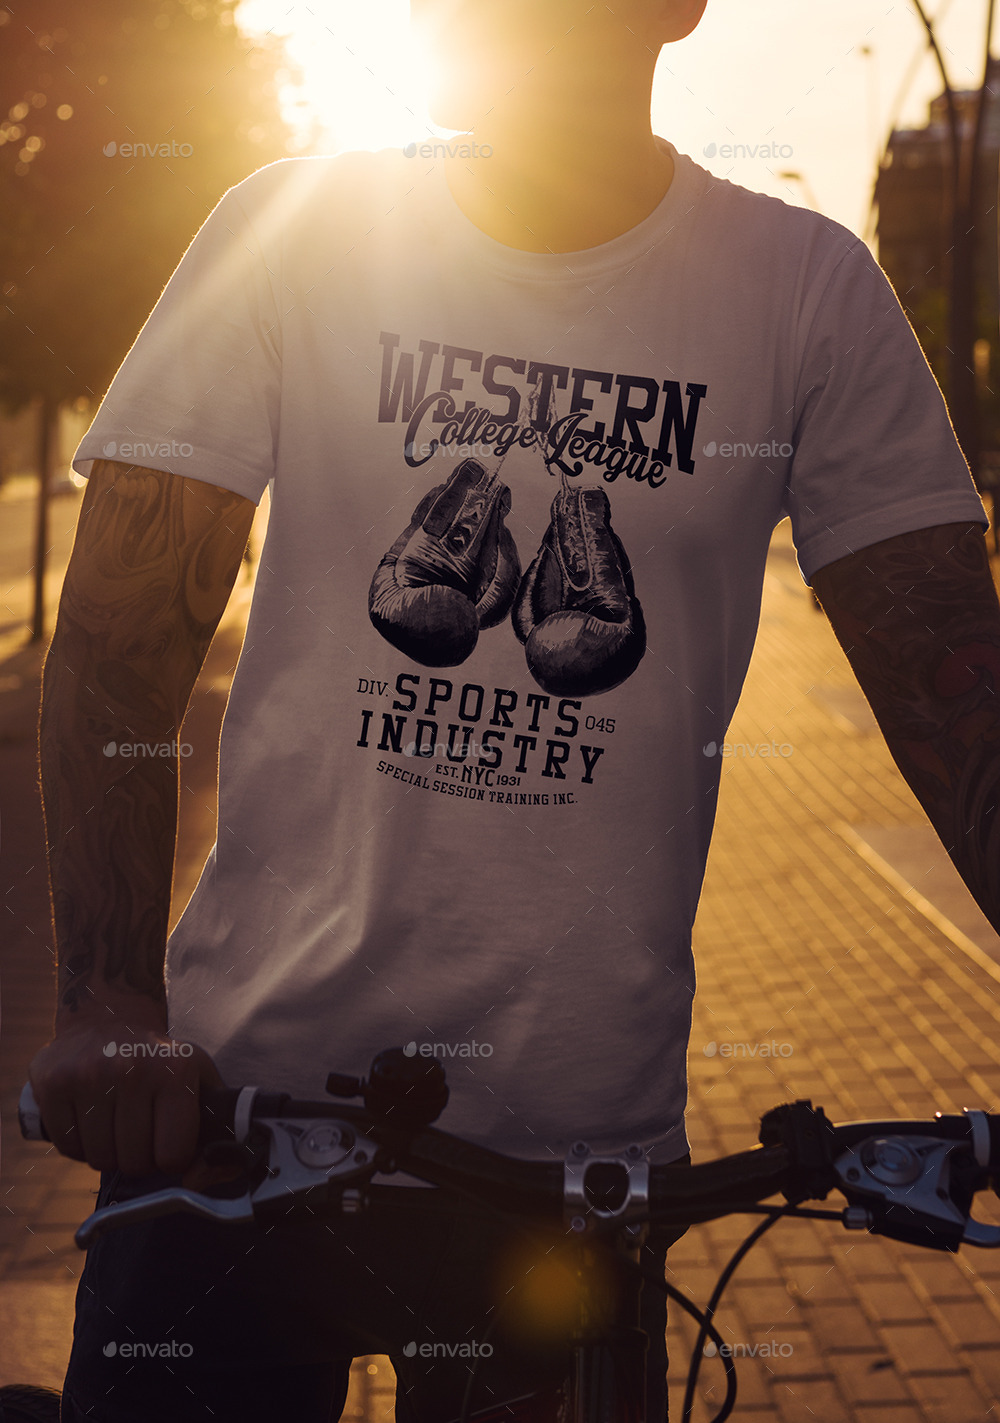 35+ Best T-Shirt Mockup Templates - Free PSD Download - PSD Templates Blog